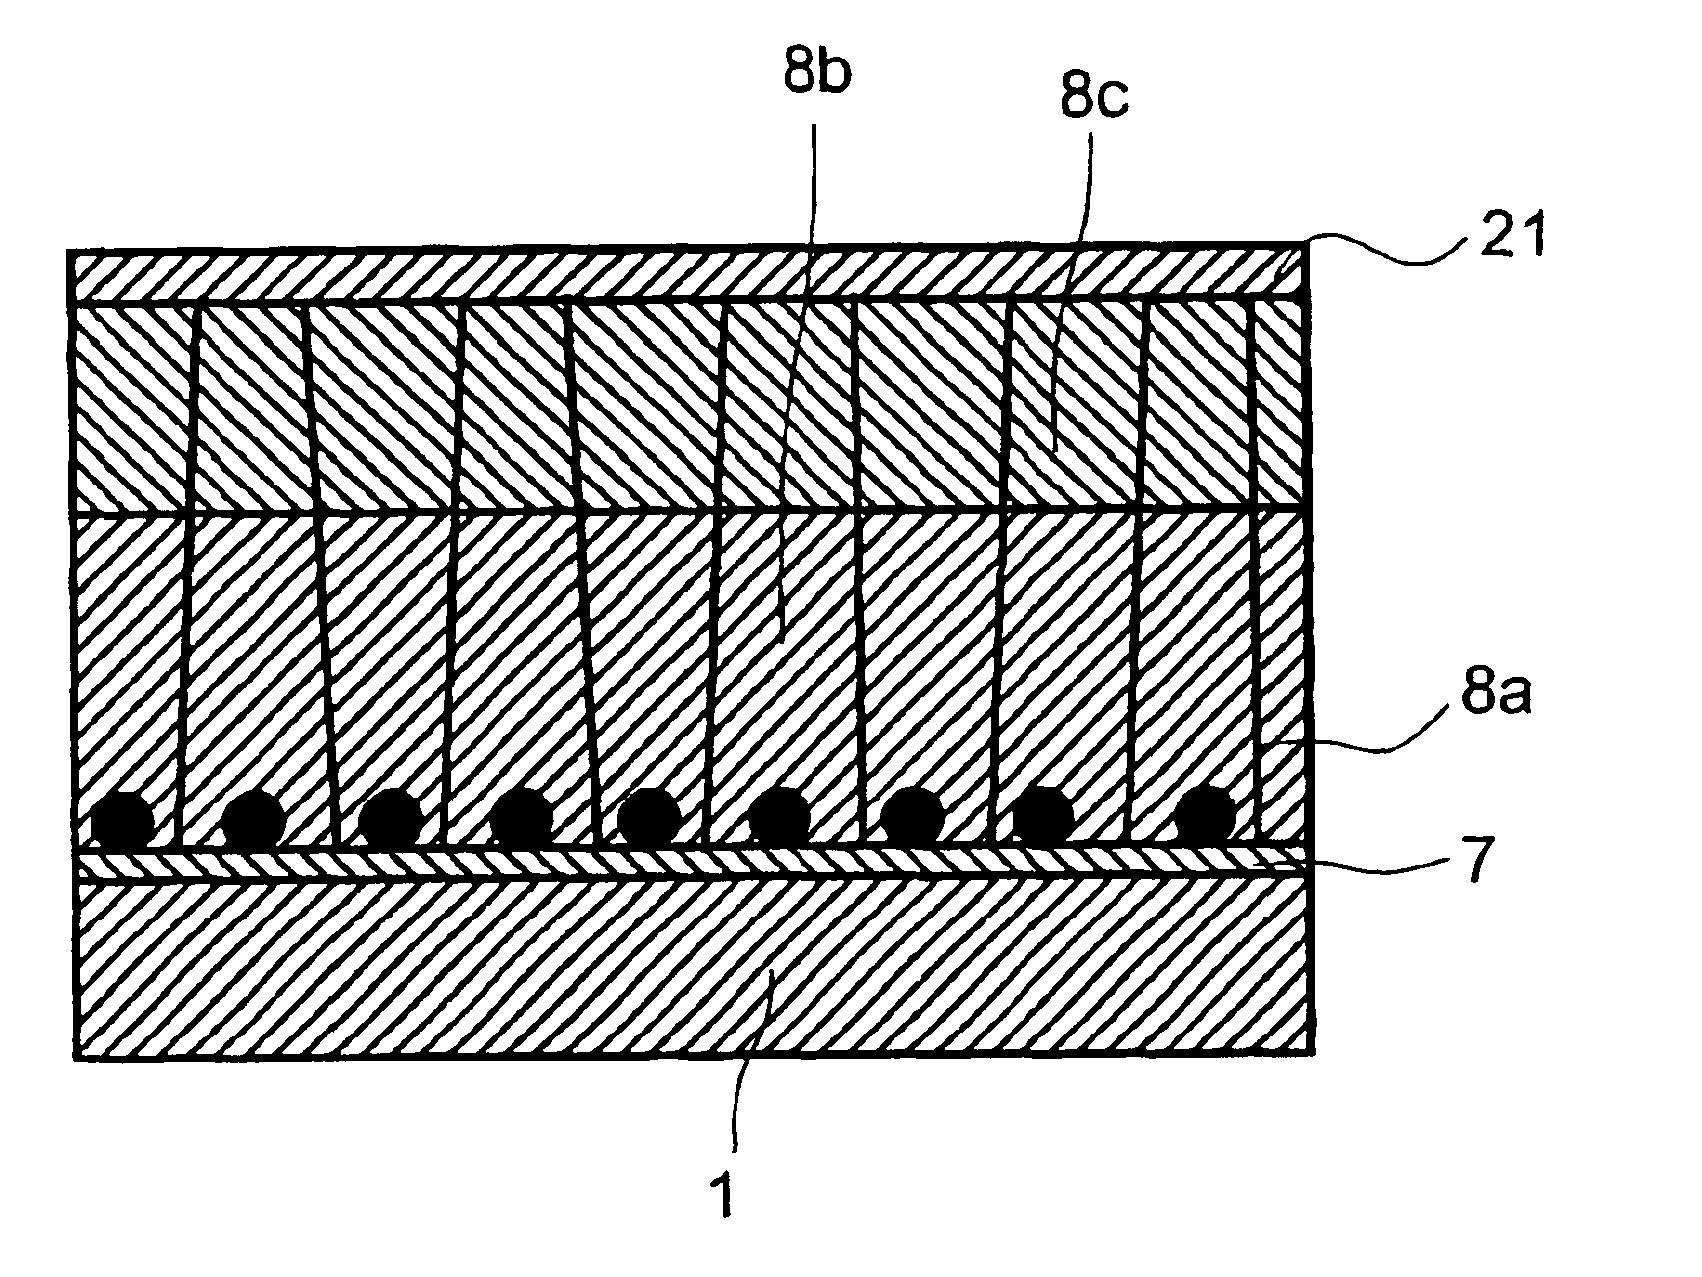 MOS transistor apparatus and method of manufacturing same